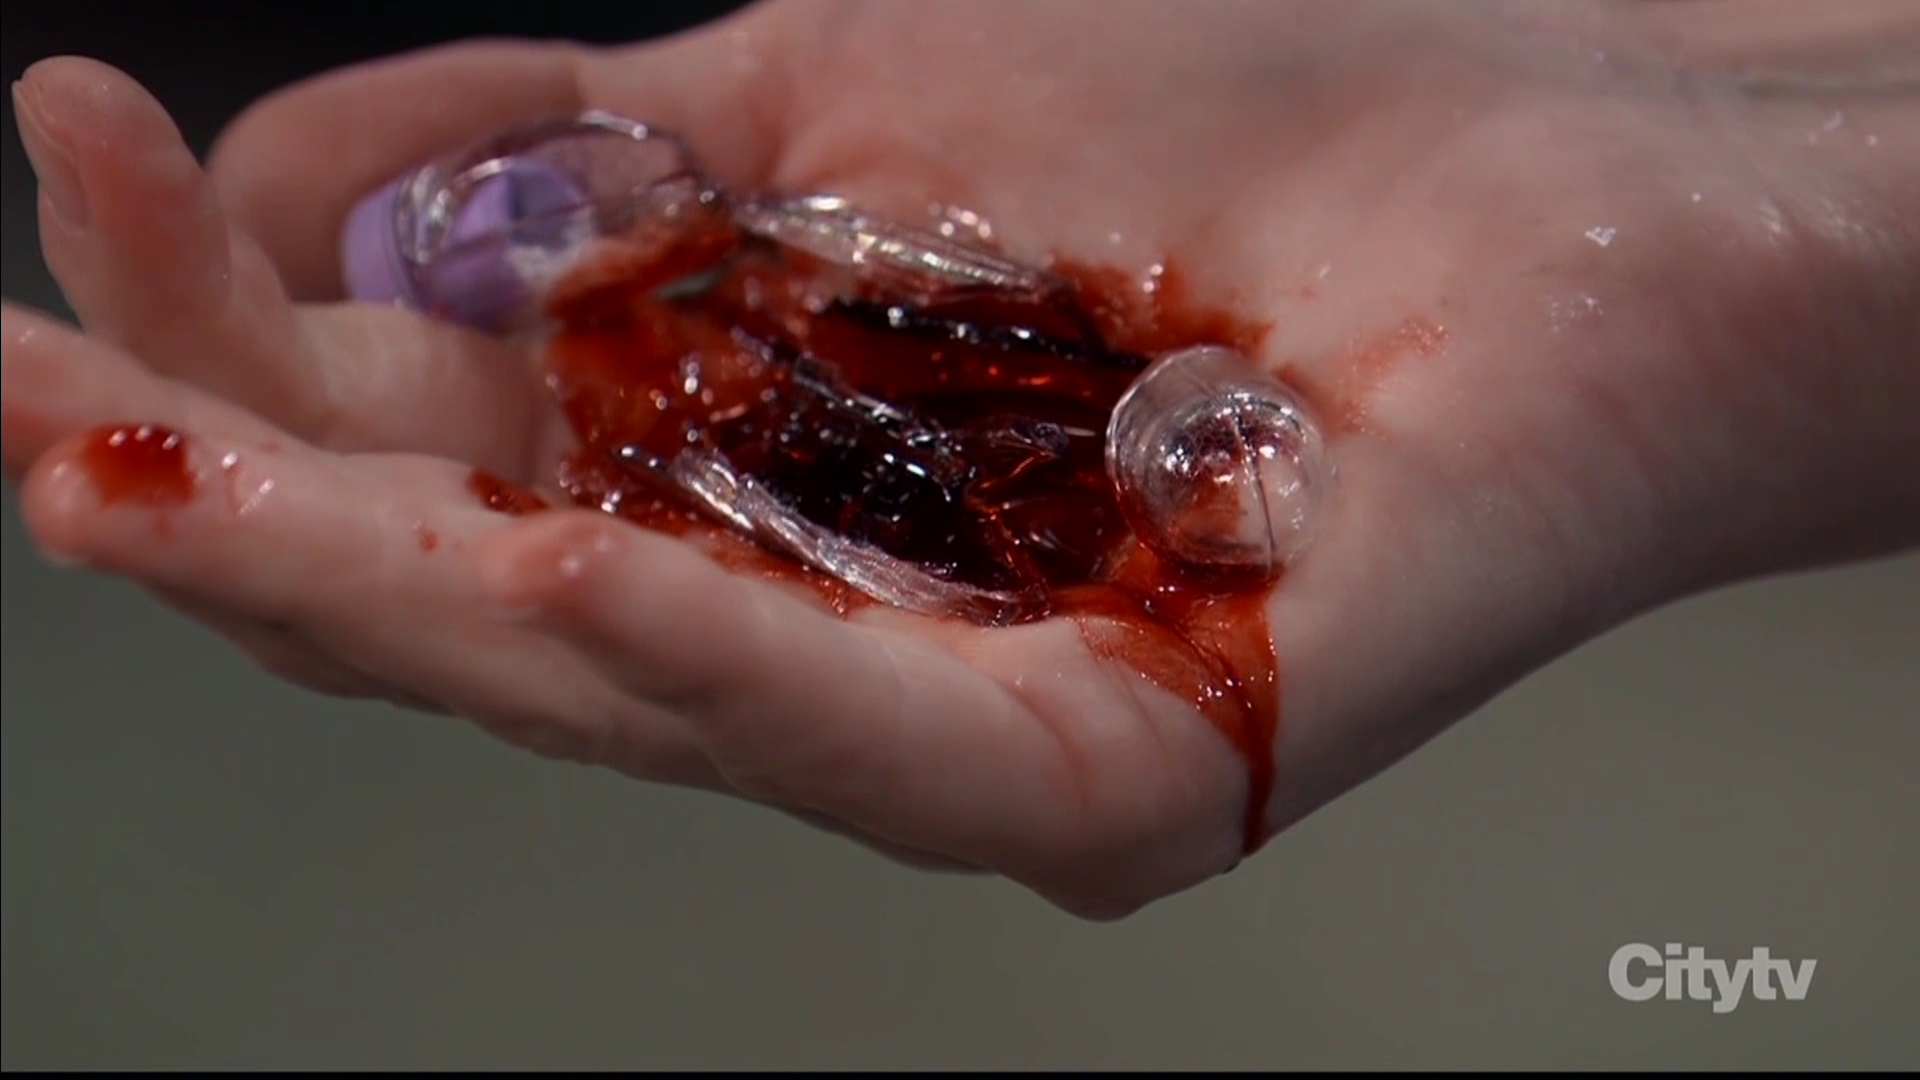 liz vial blood crushed hand GH